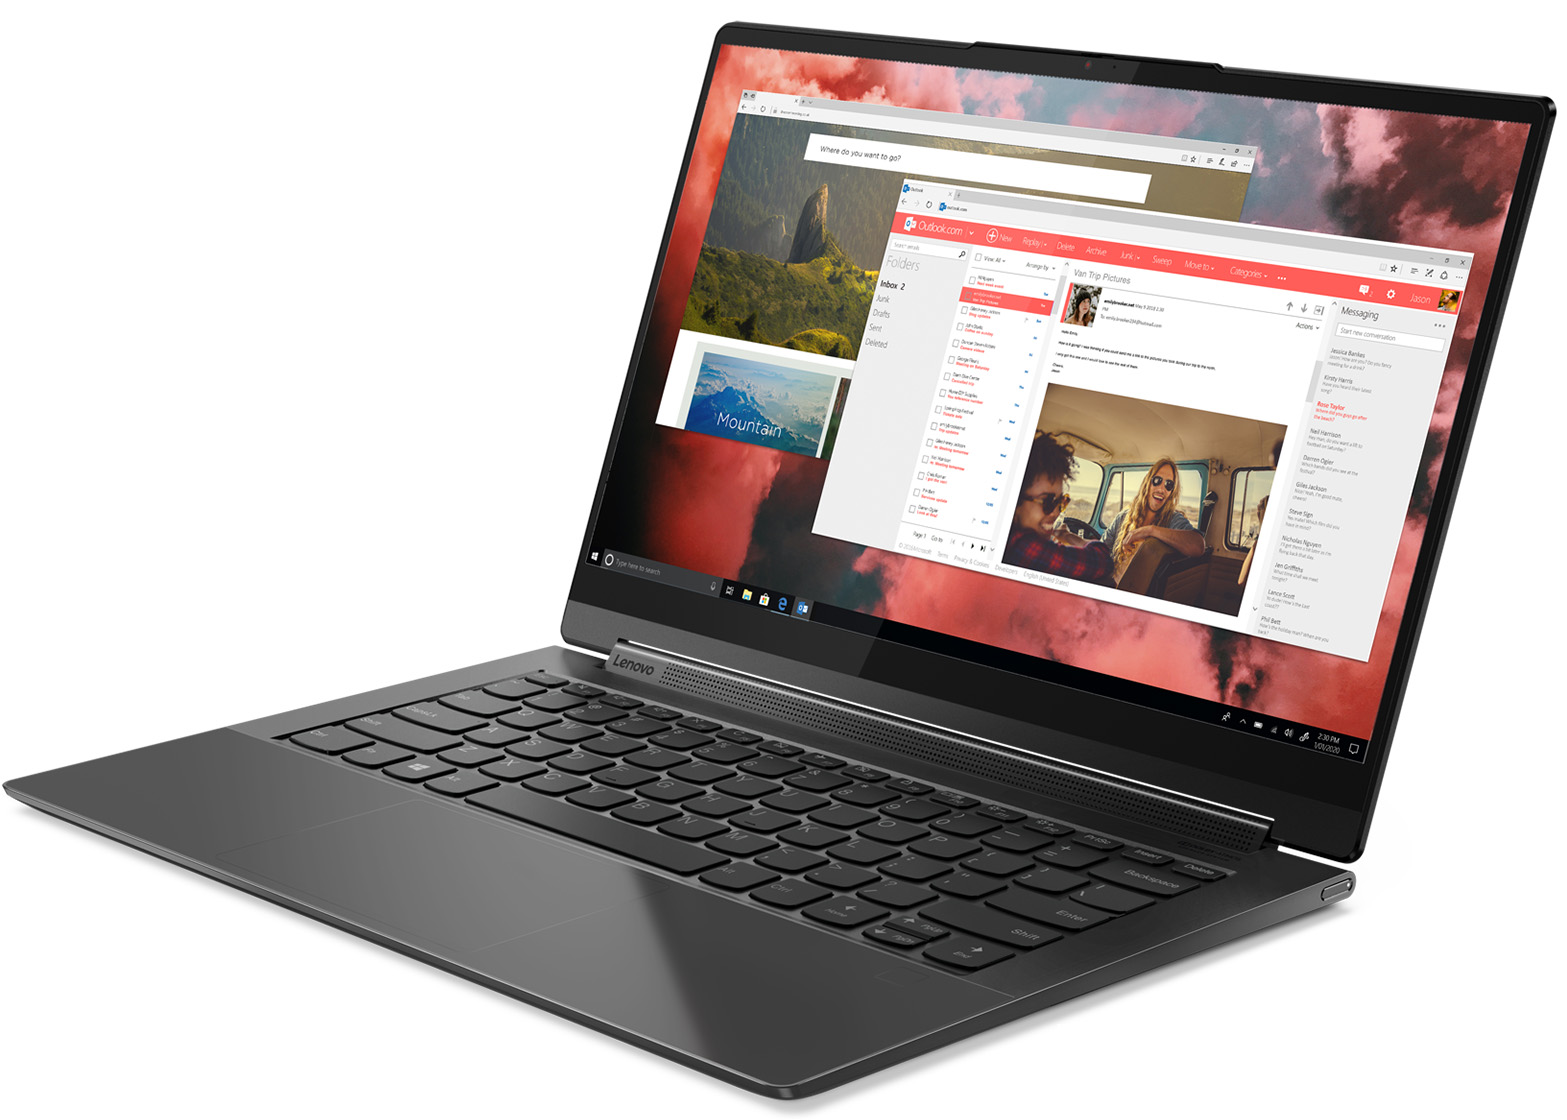 Lenovo Yoga 9i -14 2-in-1 Laptop (Intel i7-1185G7, 8GB RAM, 2TB PCIe SSD, Intel Iris Xe, Win 11 Home)